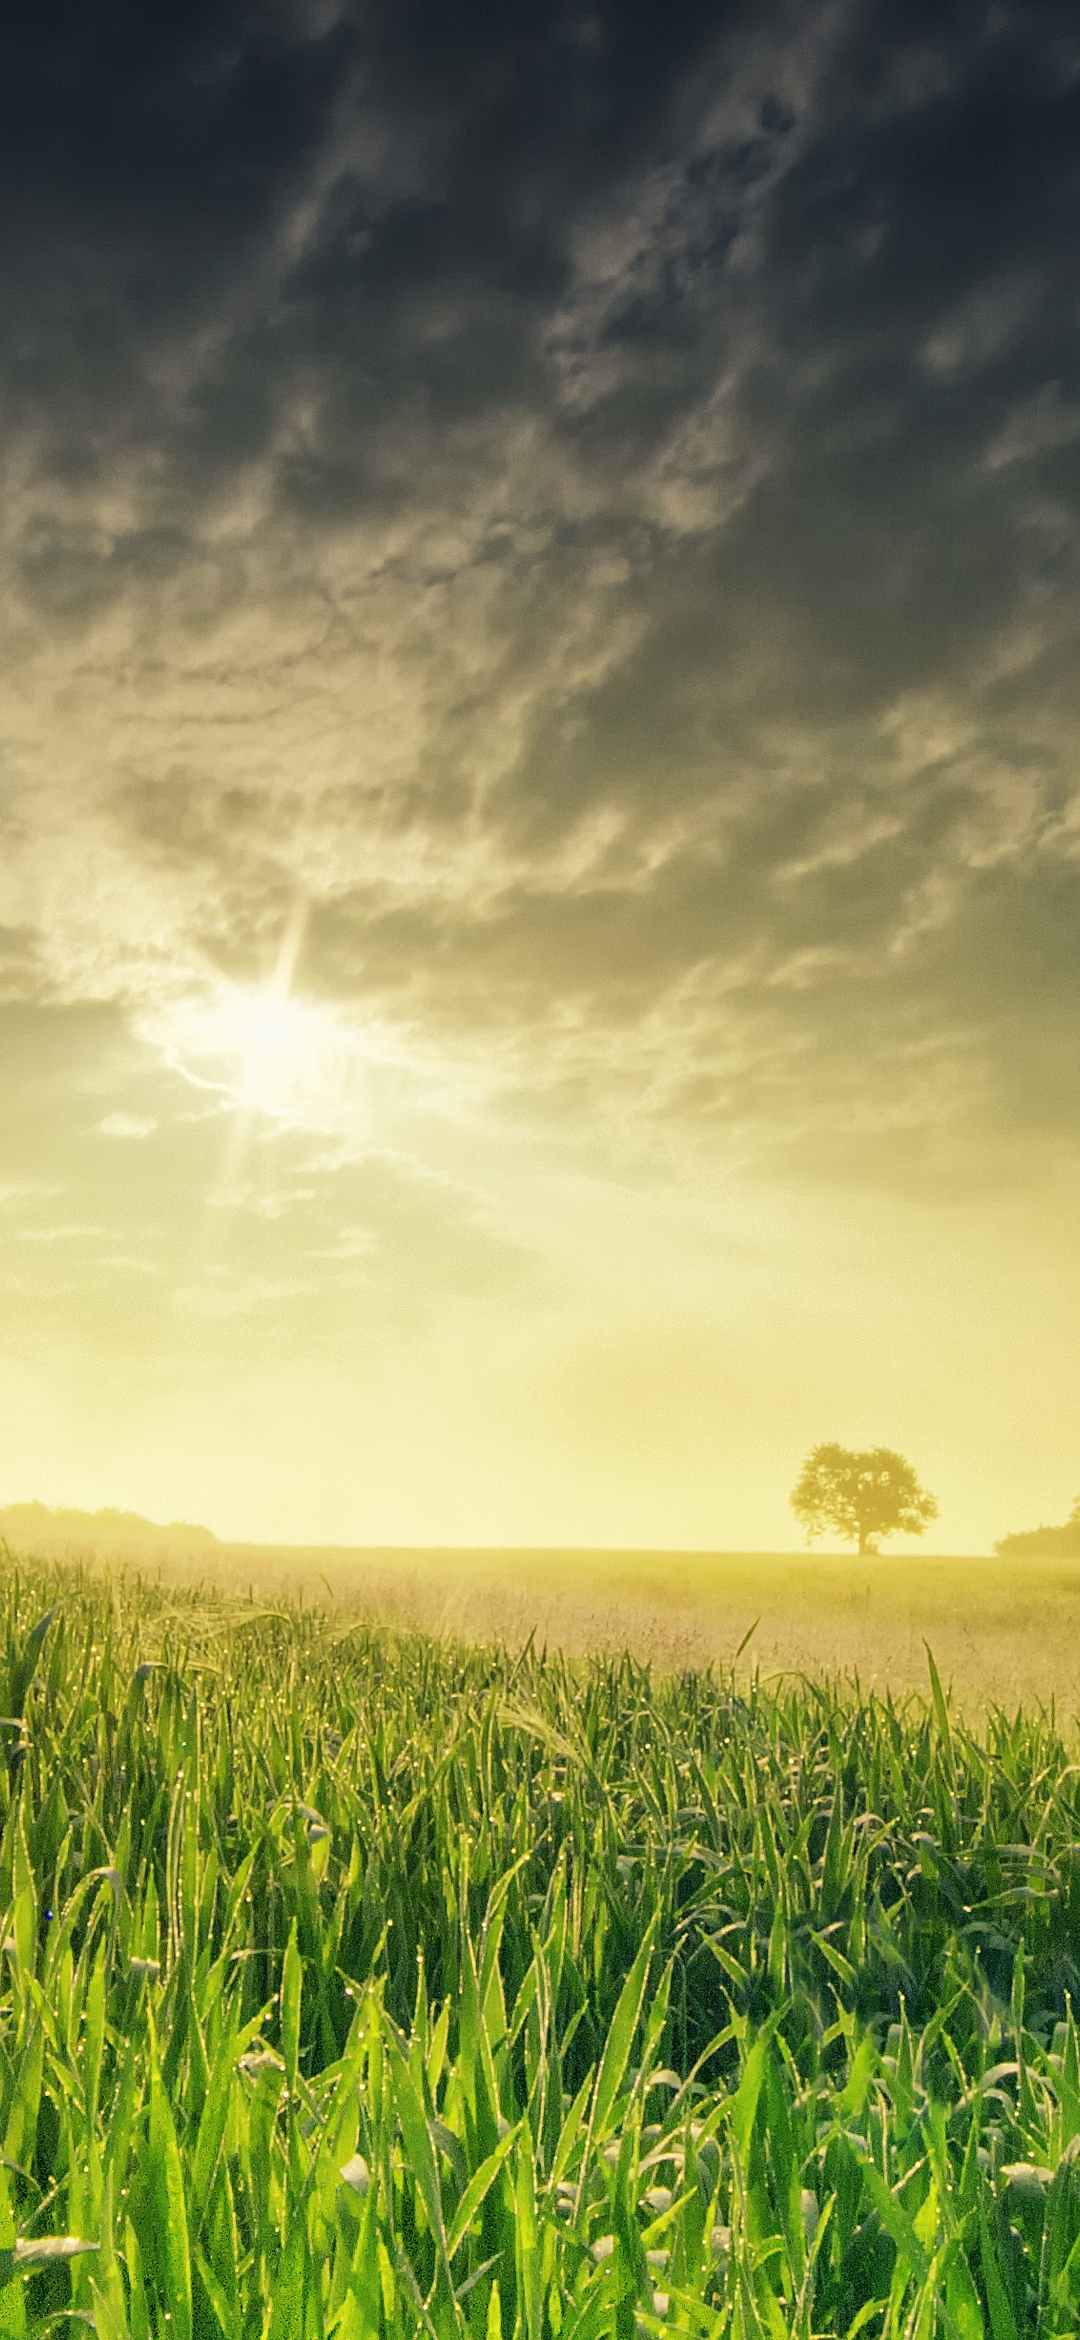 Image: Landscape, field, grass, sun, sunset, sky, clouds